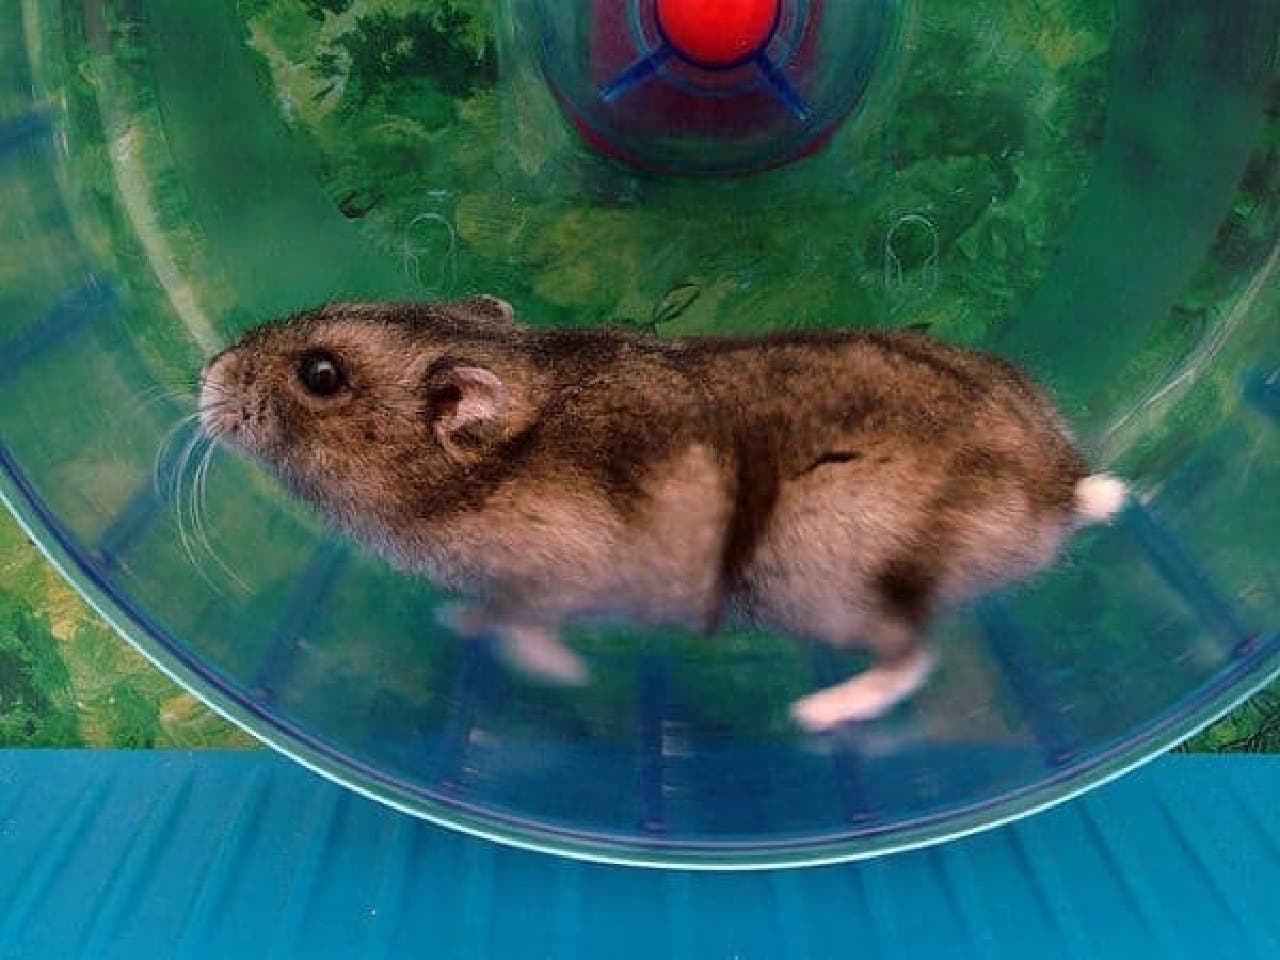 Reference image: Hamster wheel